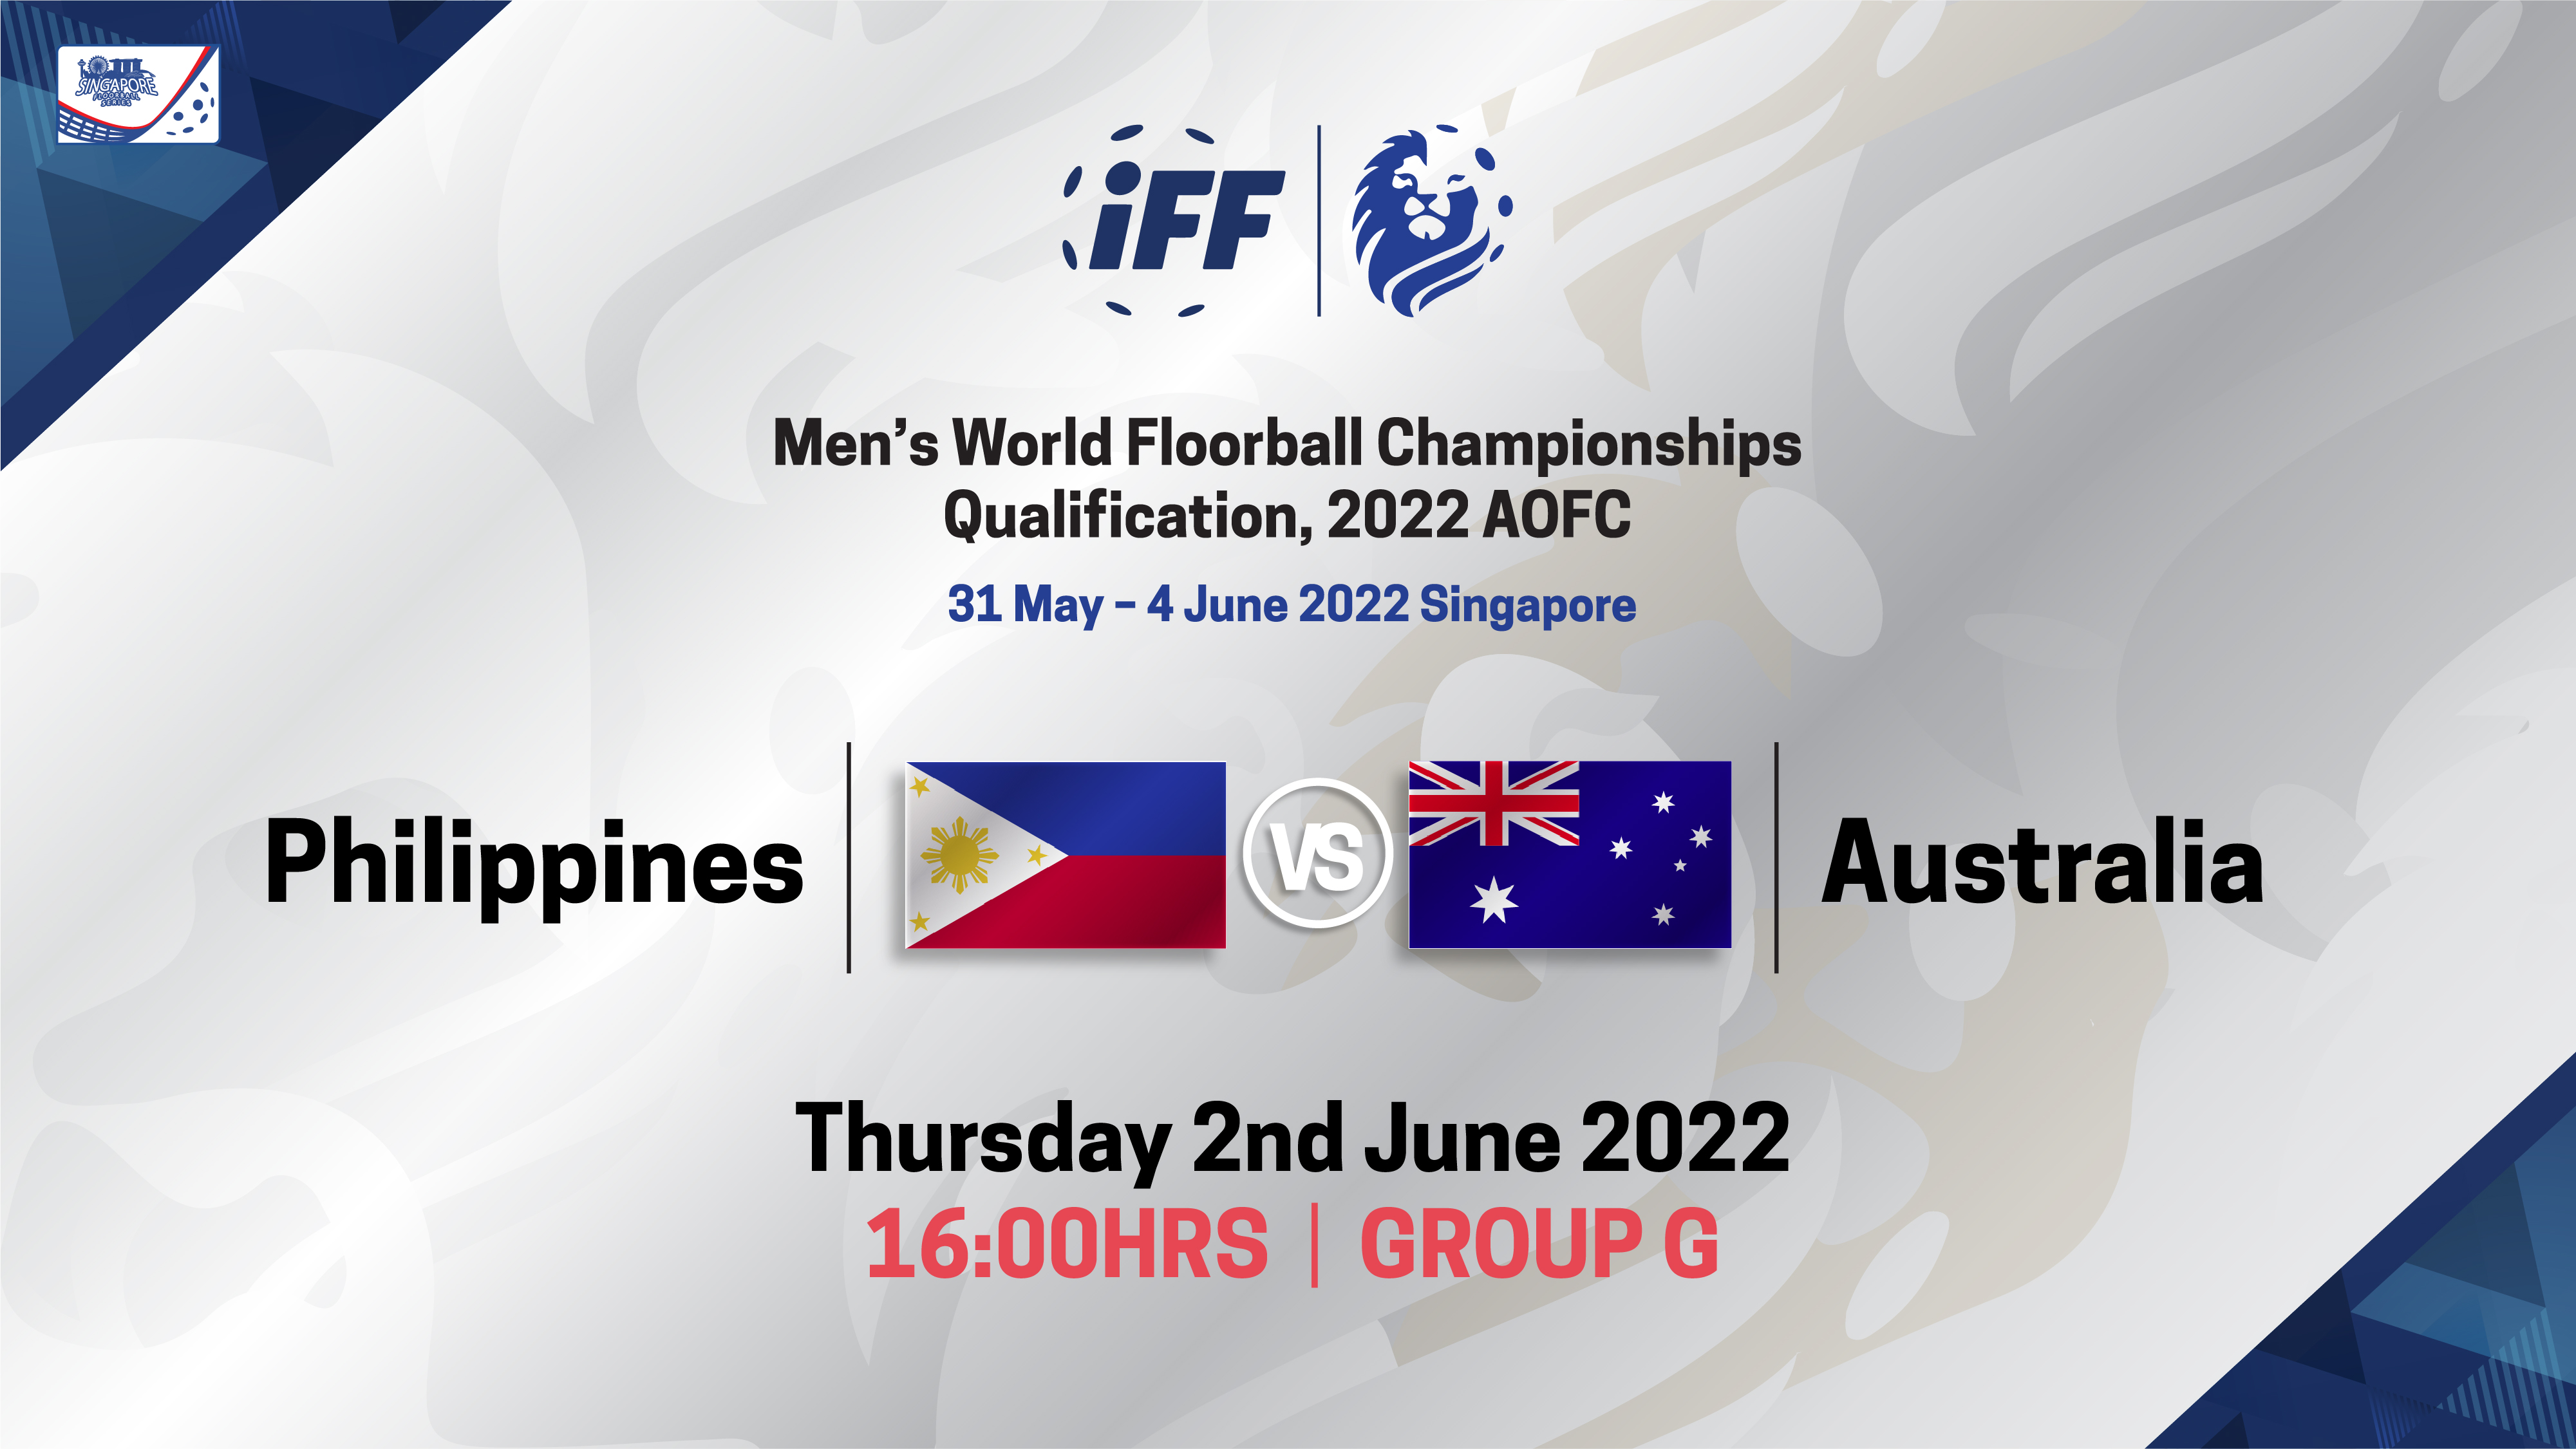 IFF Men's World Floorball Championship Qualifications 2022 - Philippines vs Australia